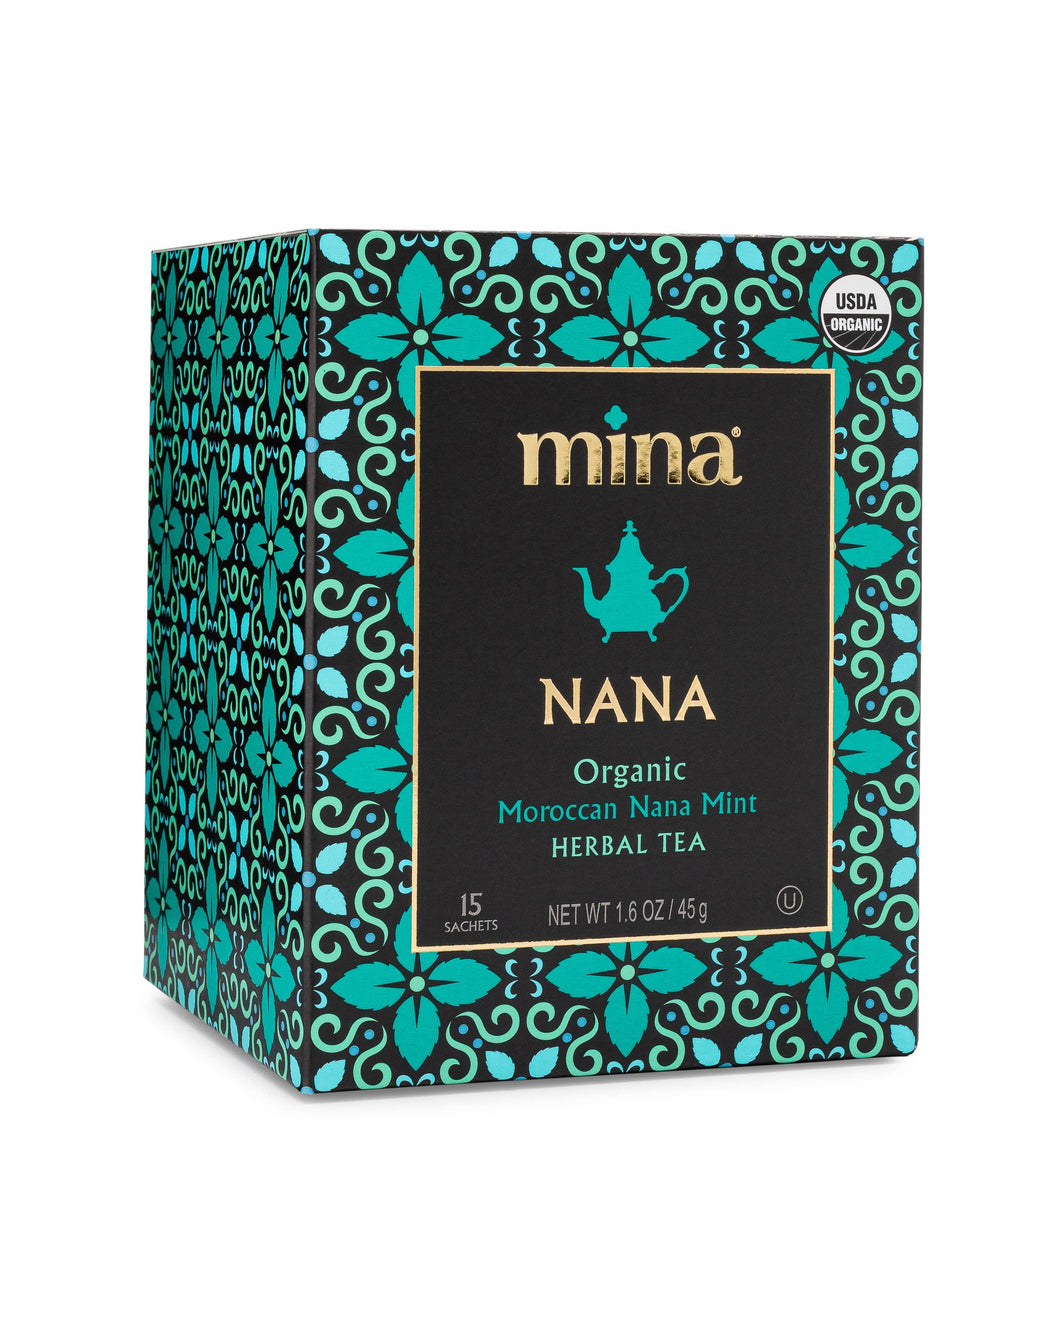 Mina - 15 ct Nana Organic Moroccan Nana Mint Herbal Tea